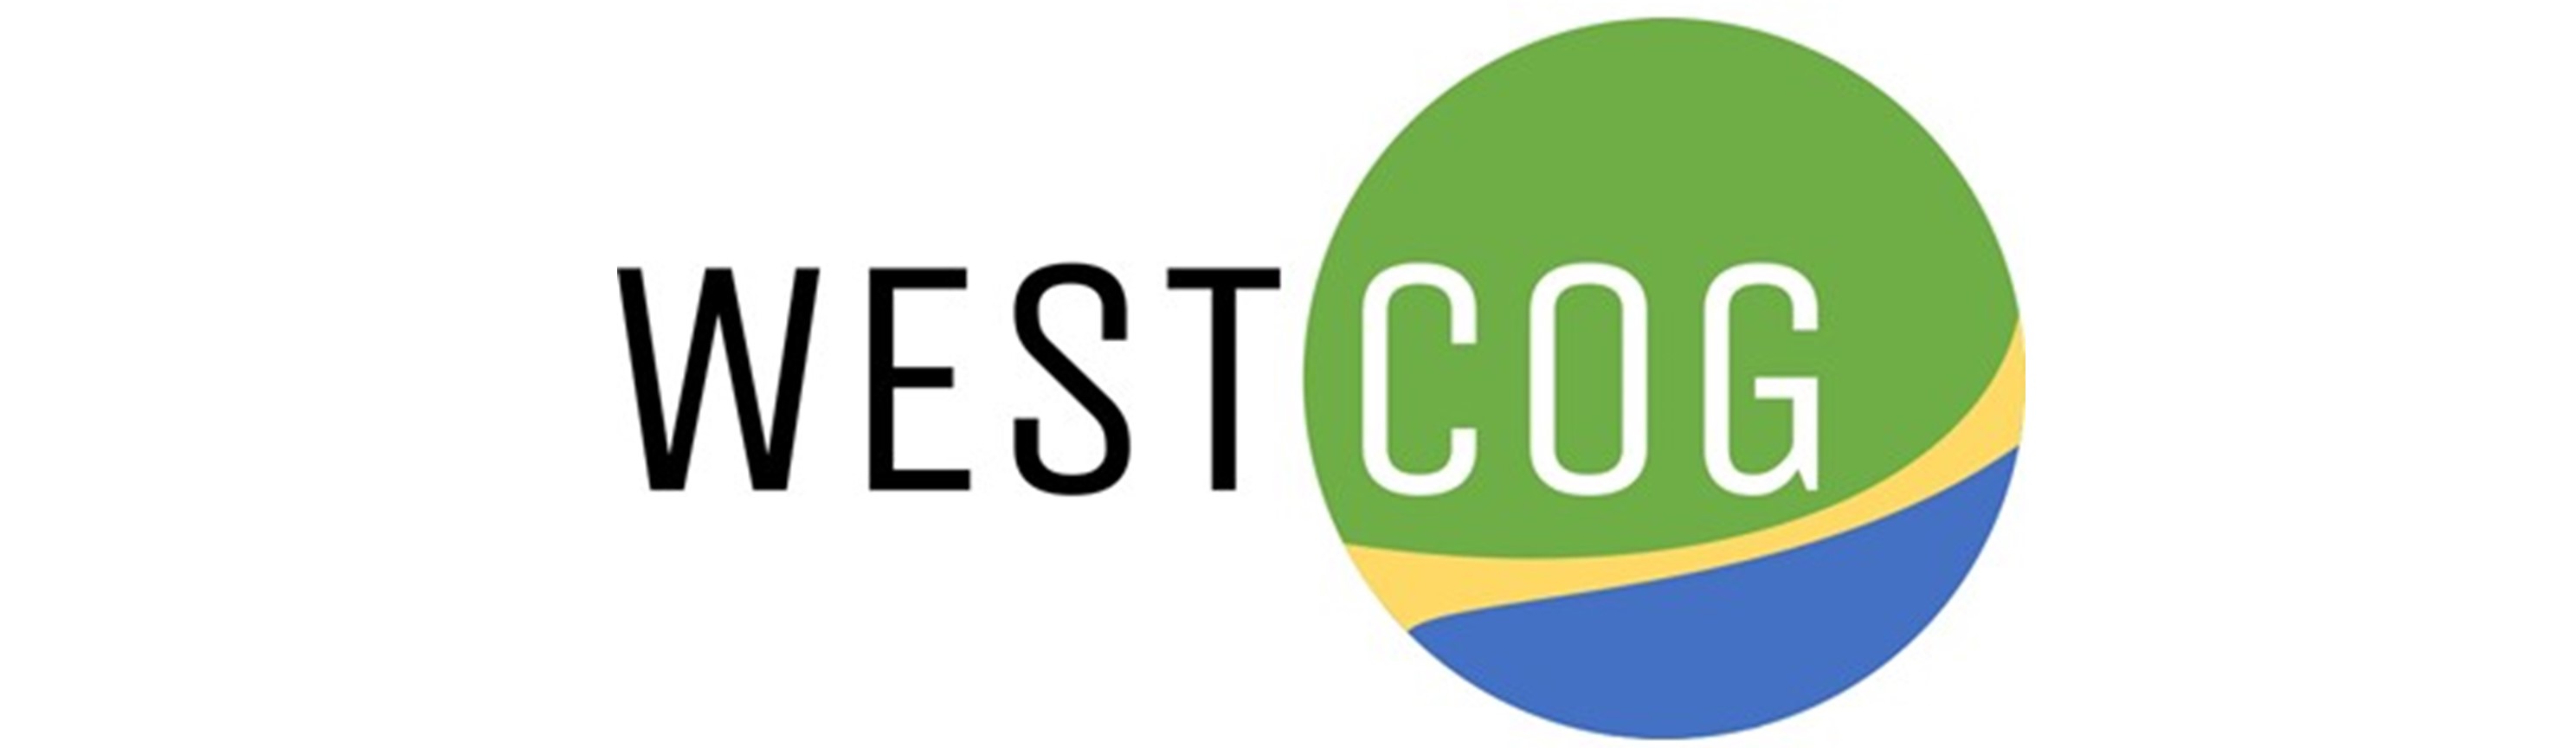 WestCOG is seeking proposals